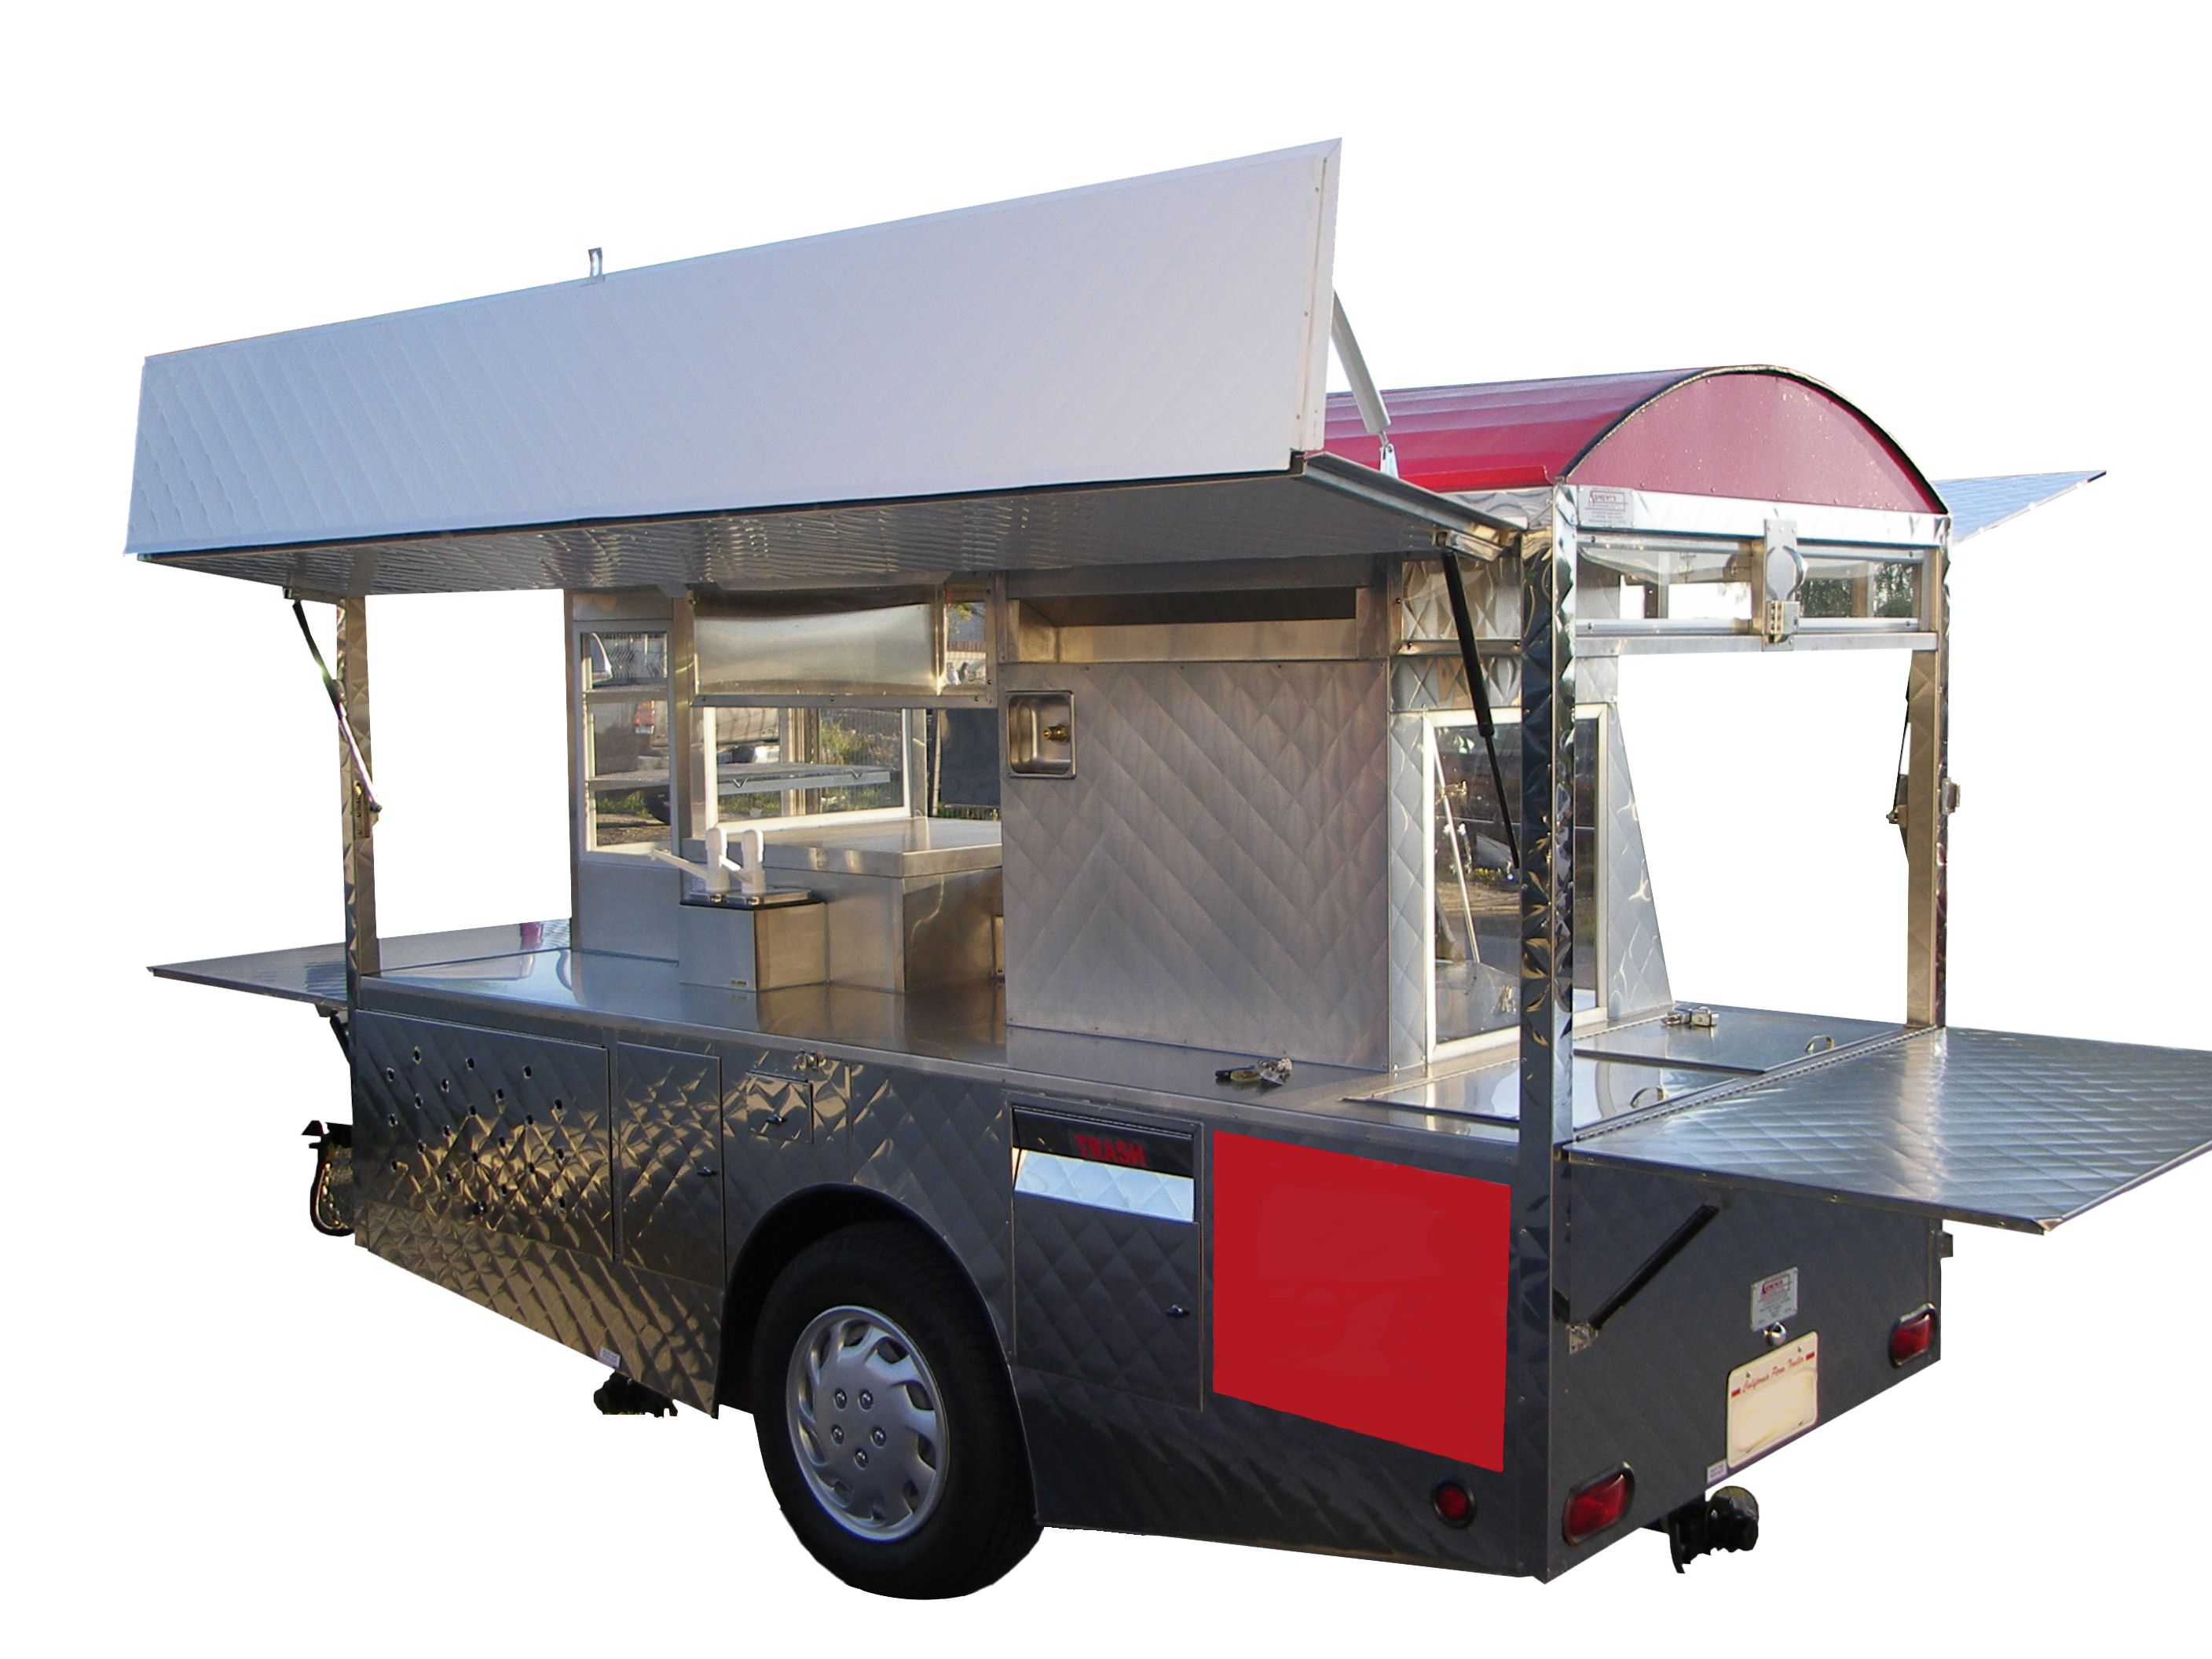 Armenco California-Compliant Steam Table Based Hot dog cart